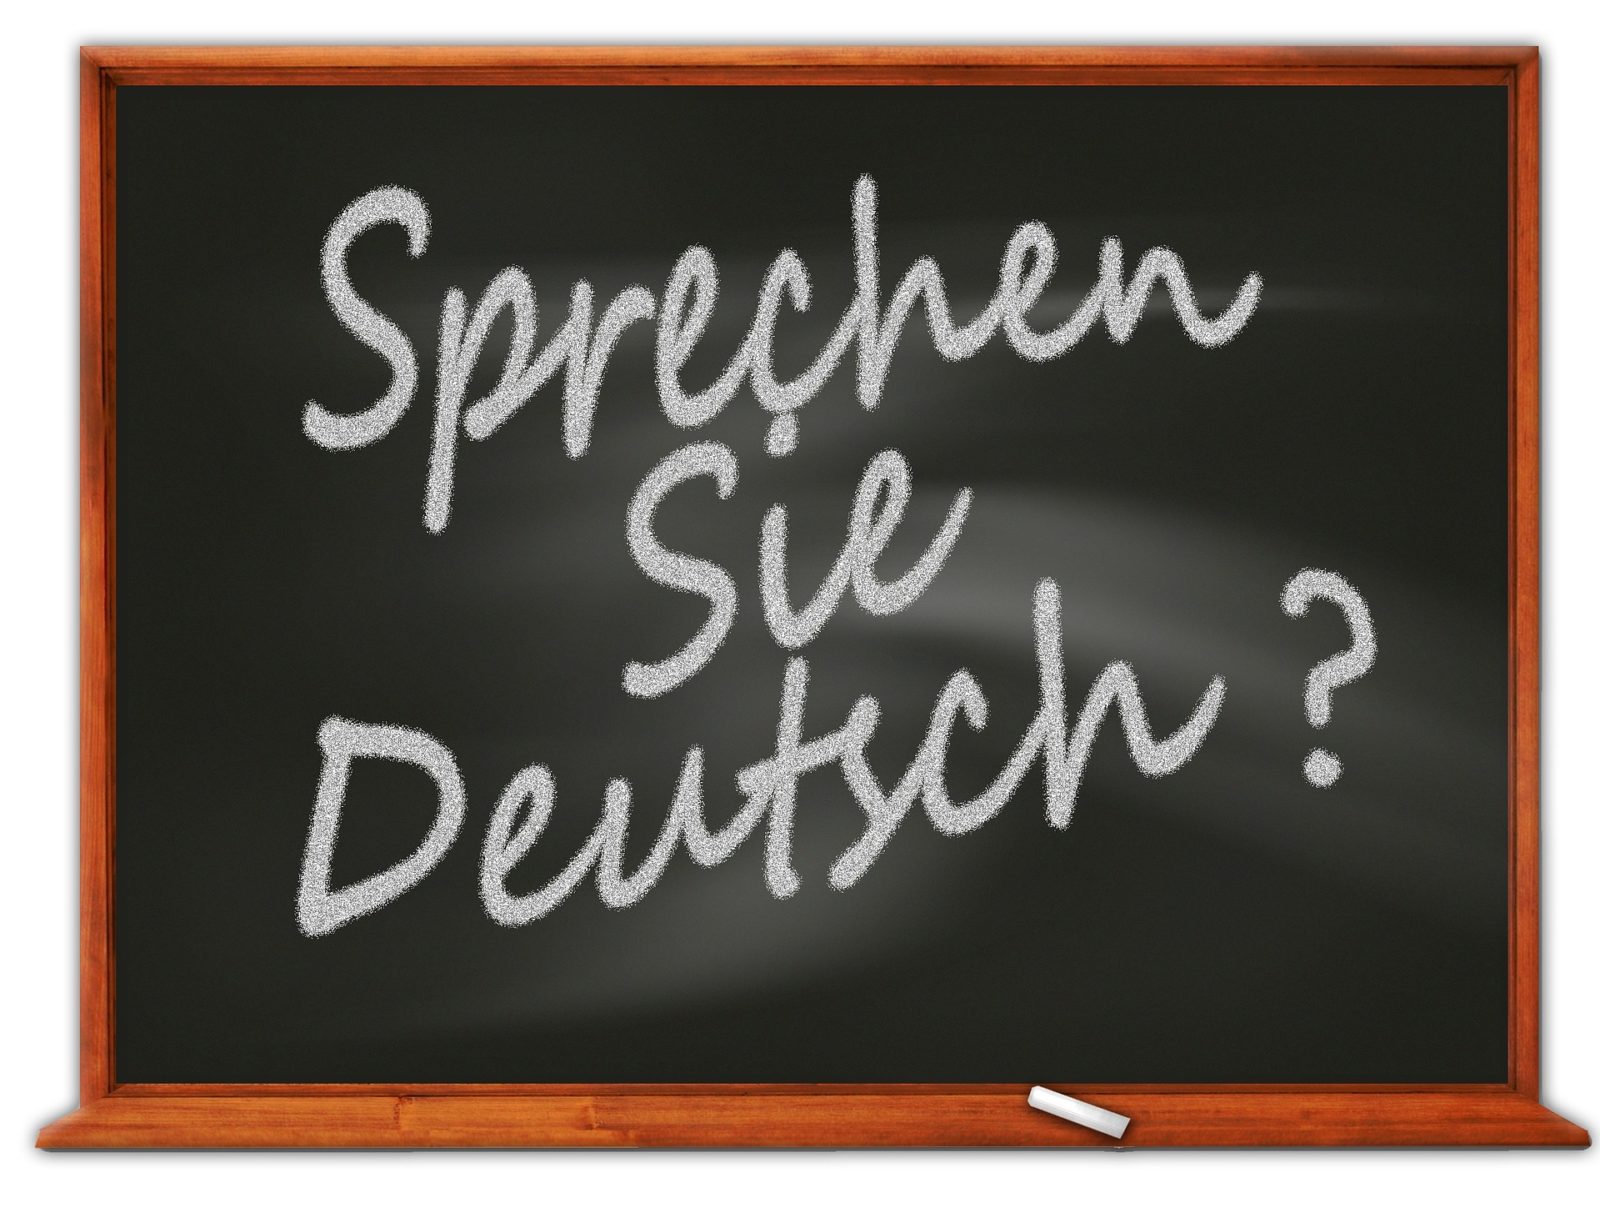 Taler De tysk, står der på tysk sprog på en skoletavle. 